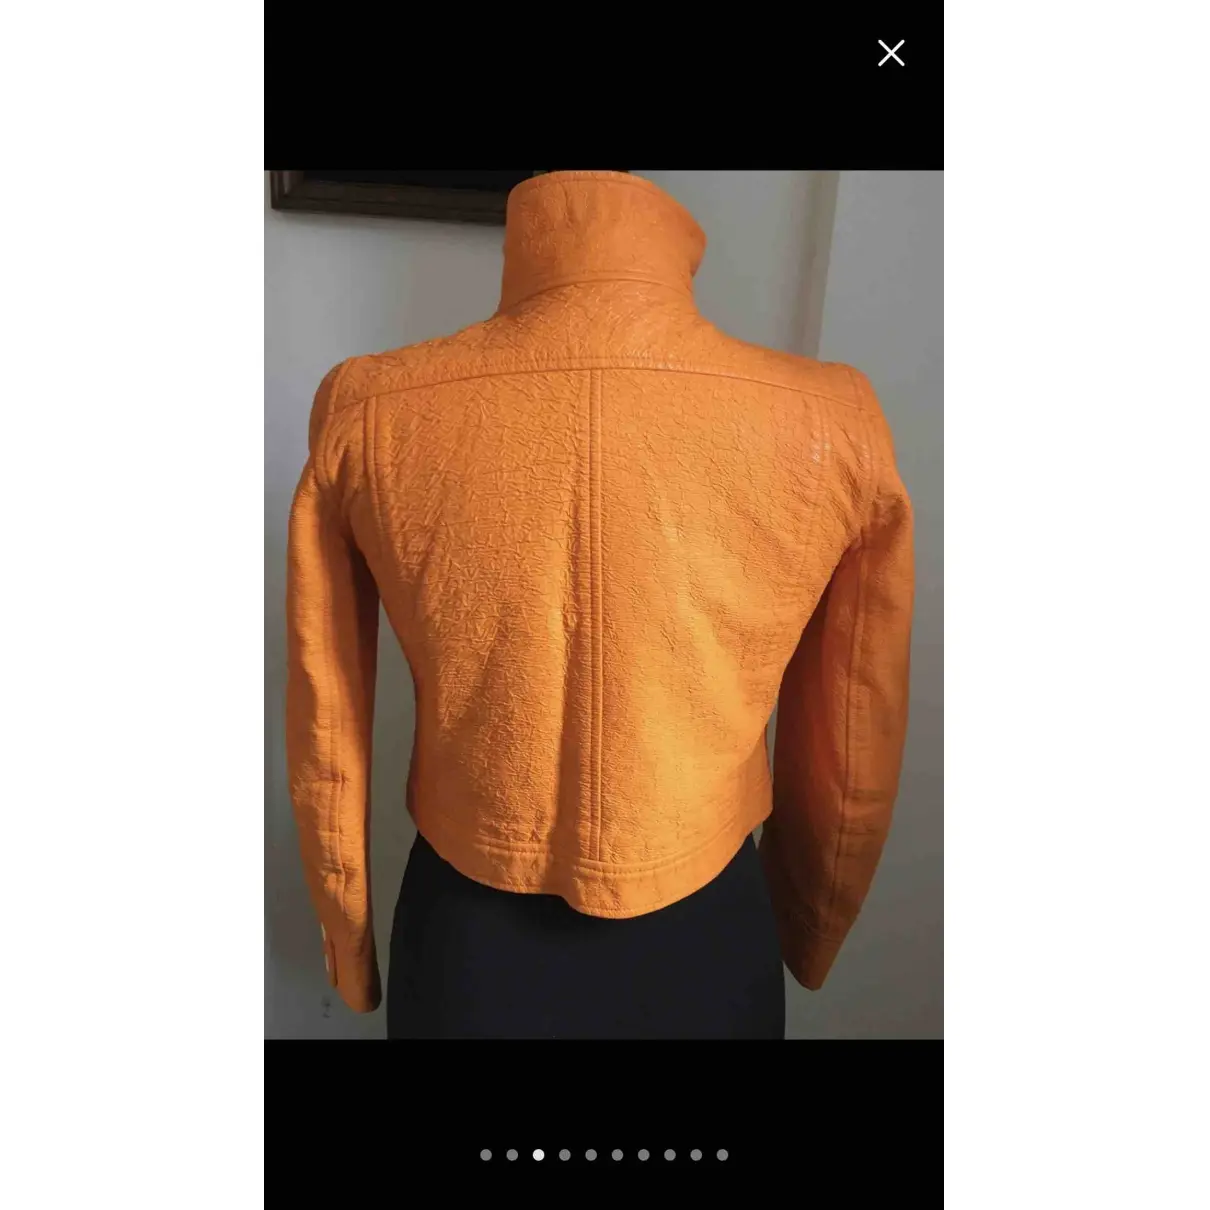 Courrèges Jacket for sale - Vintage